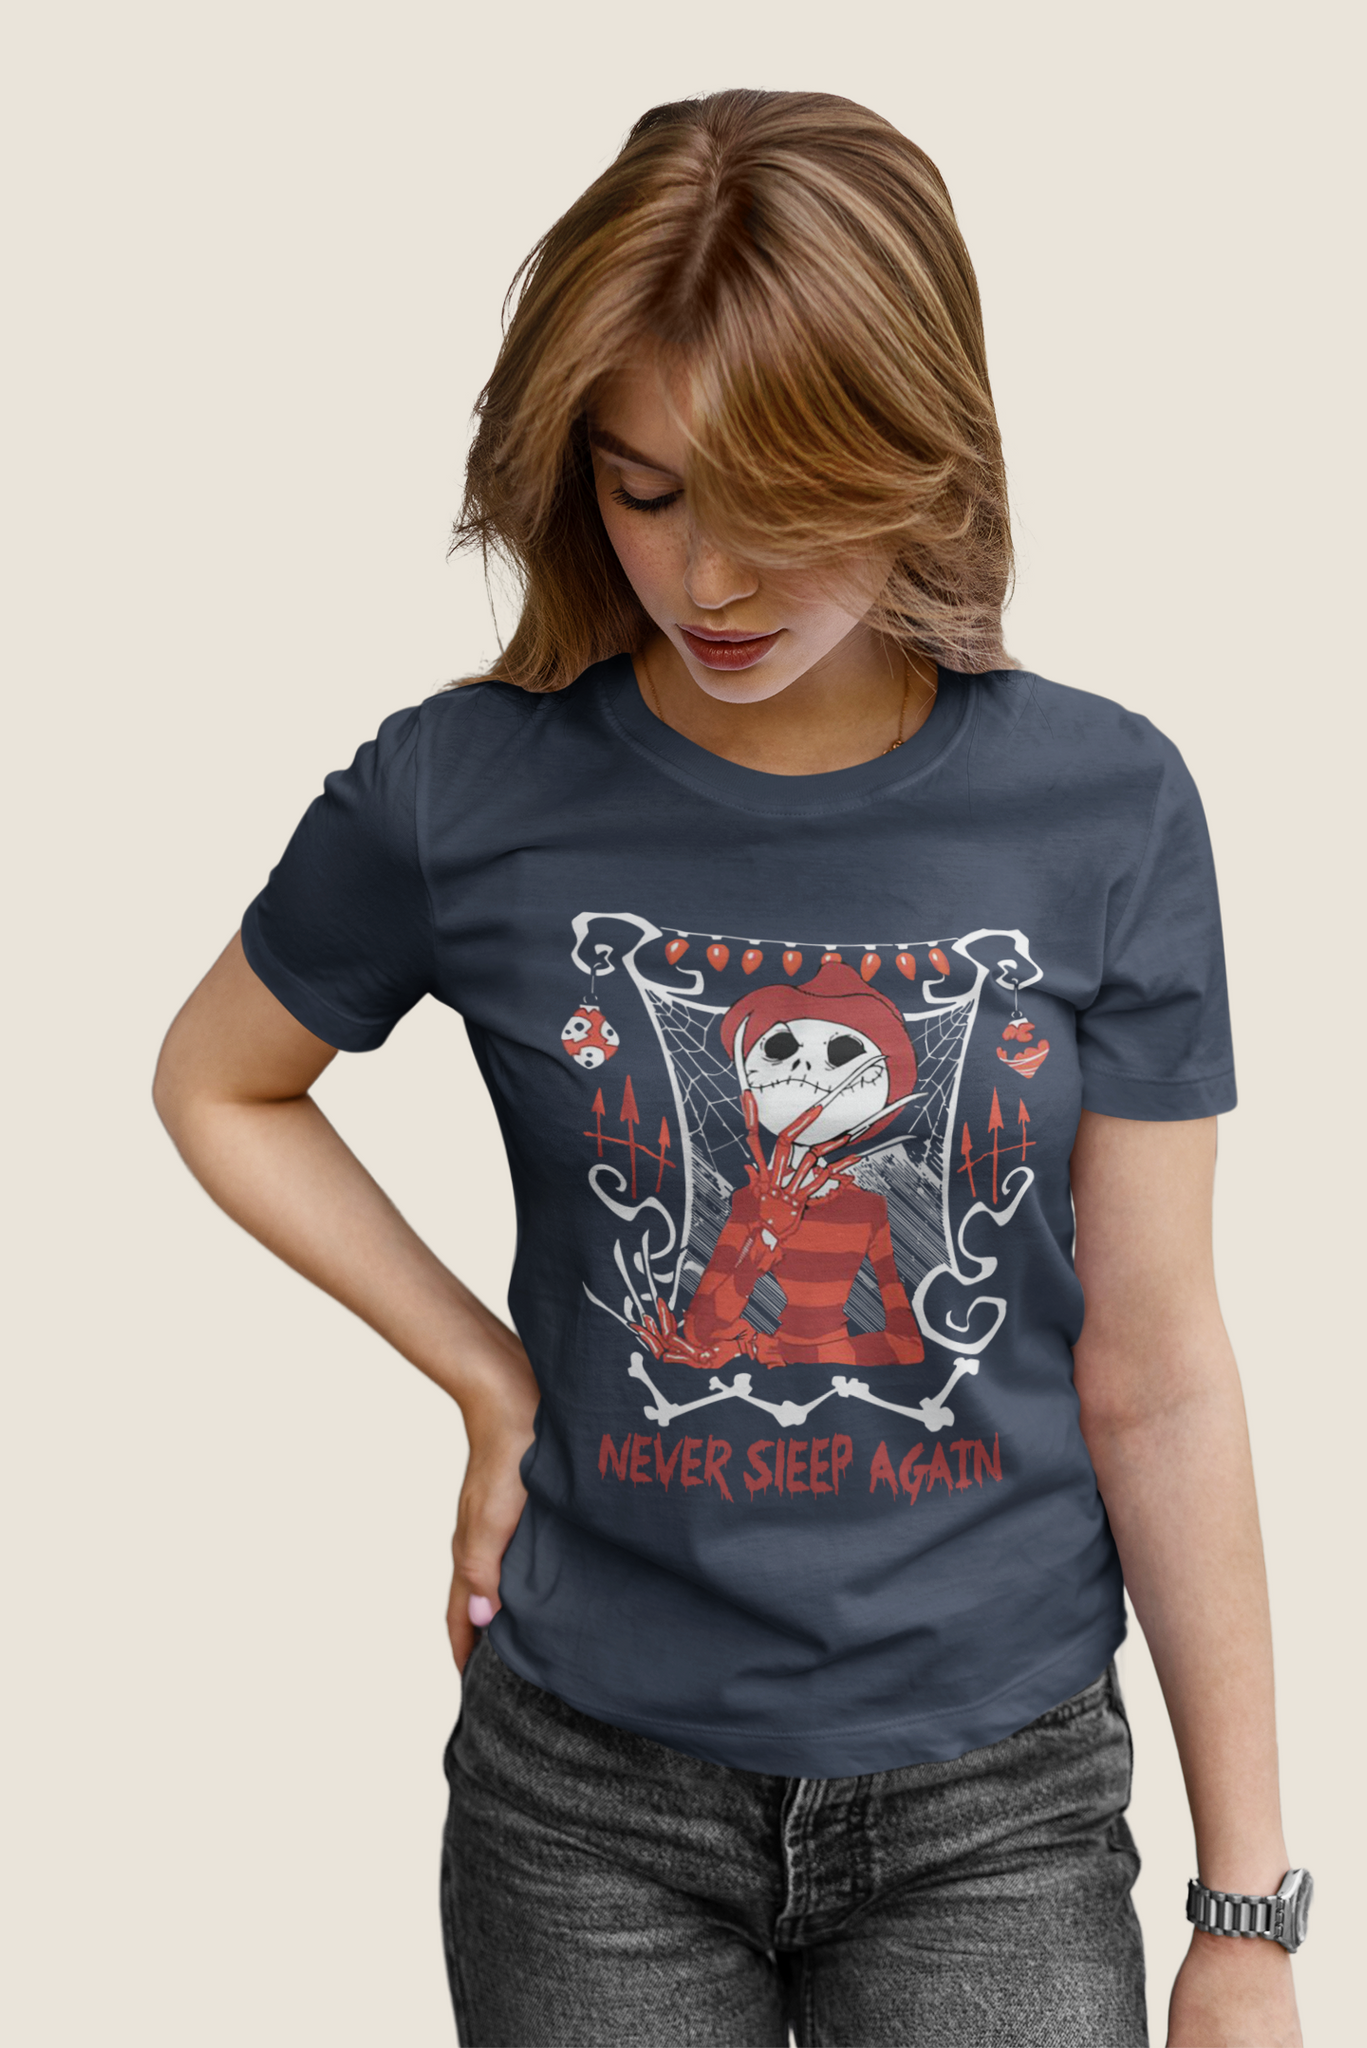 Nightmare Before Christmas T Shirt, Jack Skellington Freddy Krueger Costume T Shirt, Never Sleep Again Tshirt, Halloween Gifts